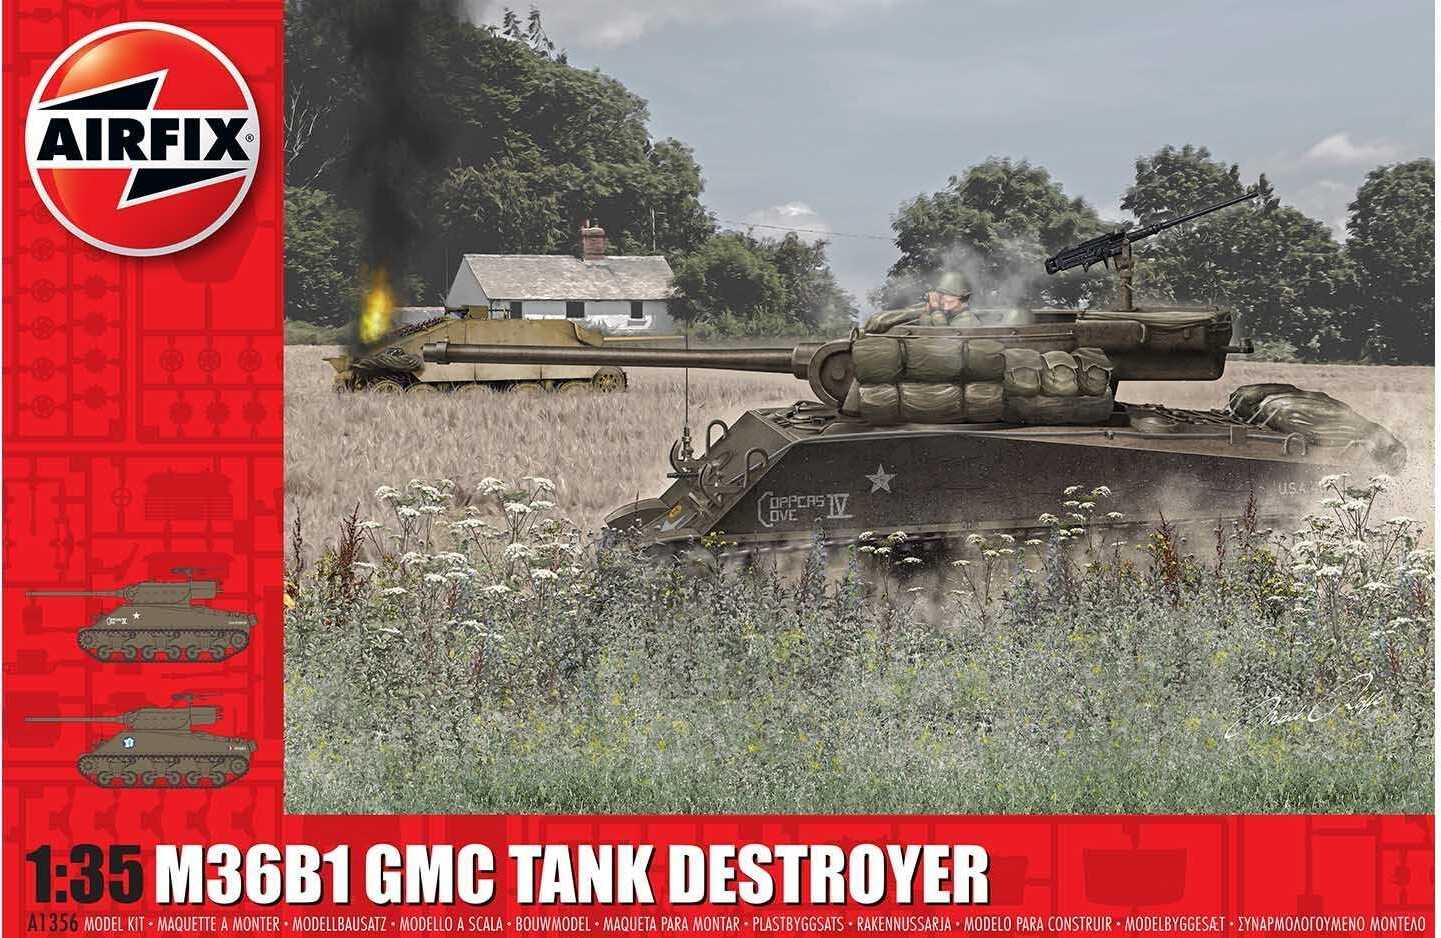 Classic Kit tank A1356 - M36B1 GMC (US Army) (1:35)